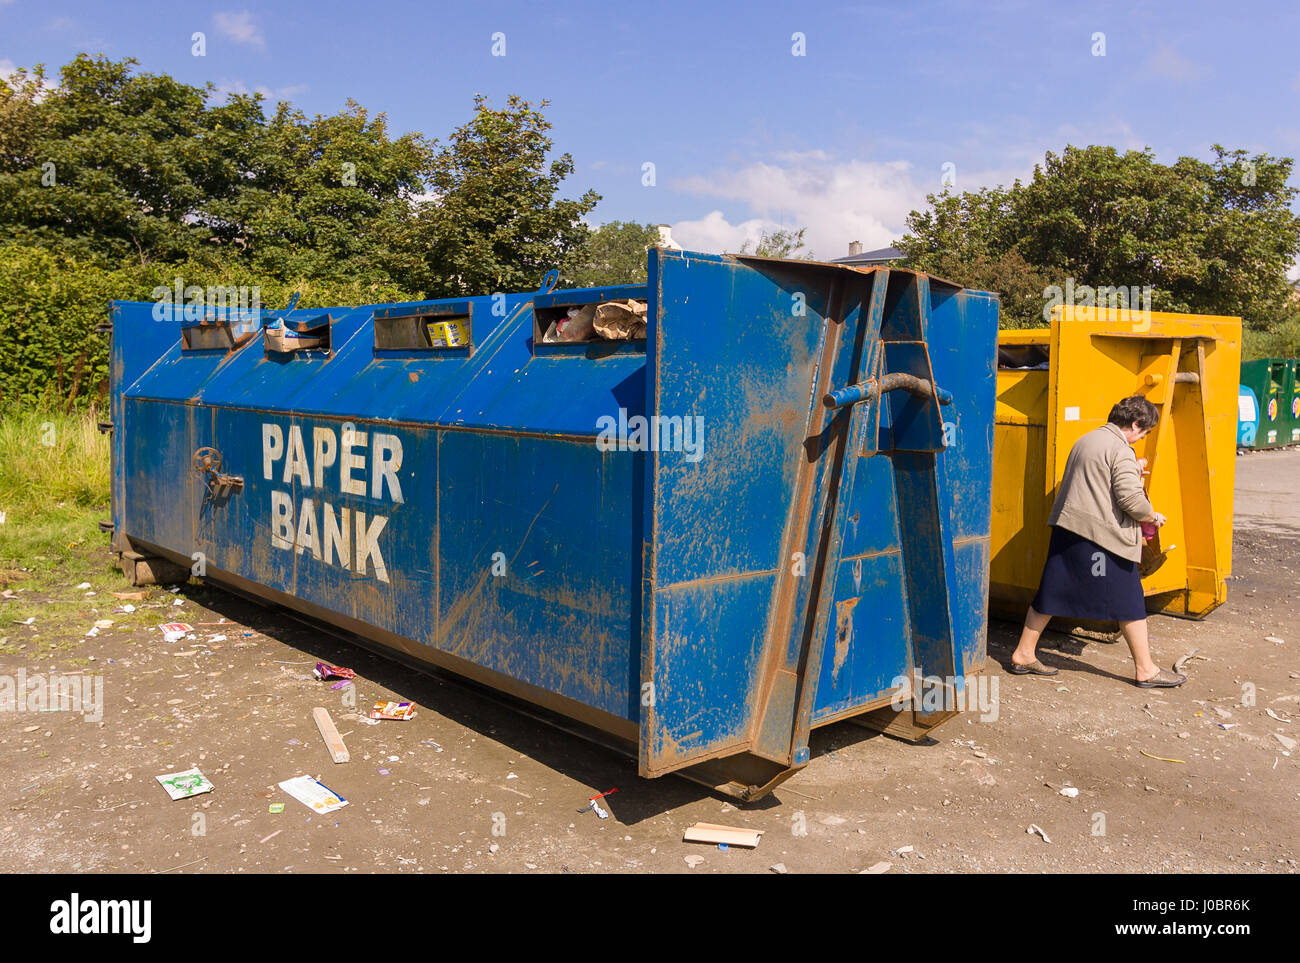 DONEGAL, Irlanda - contenedores de reciclaje. Foto de stock